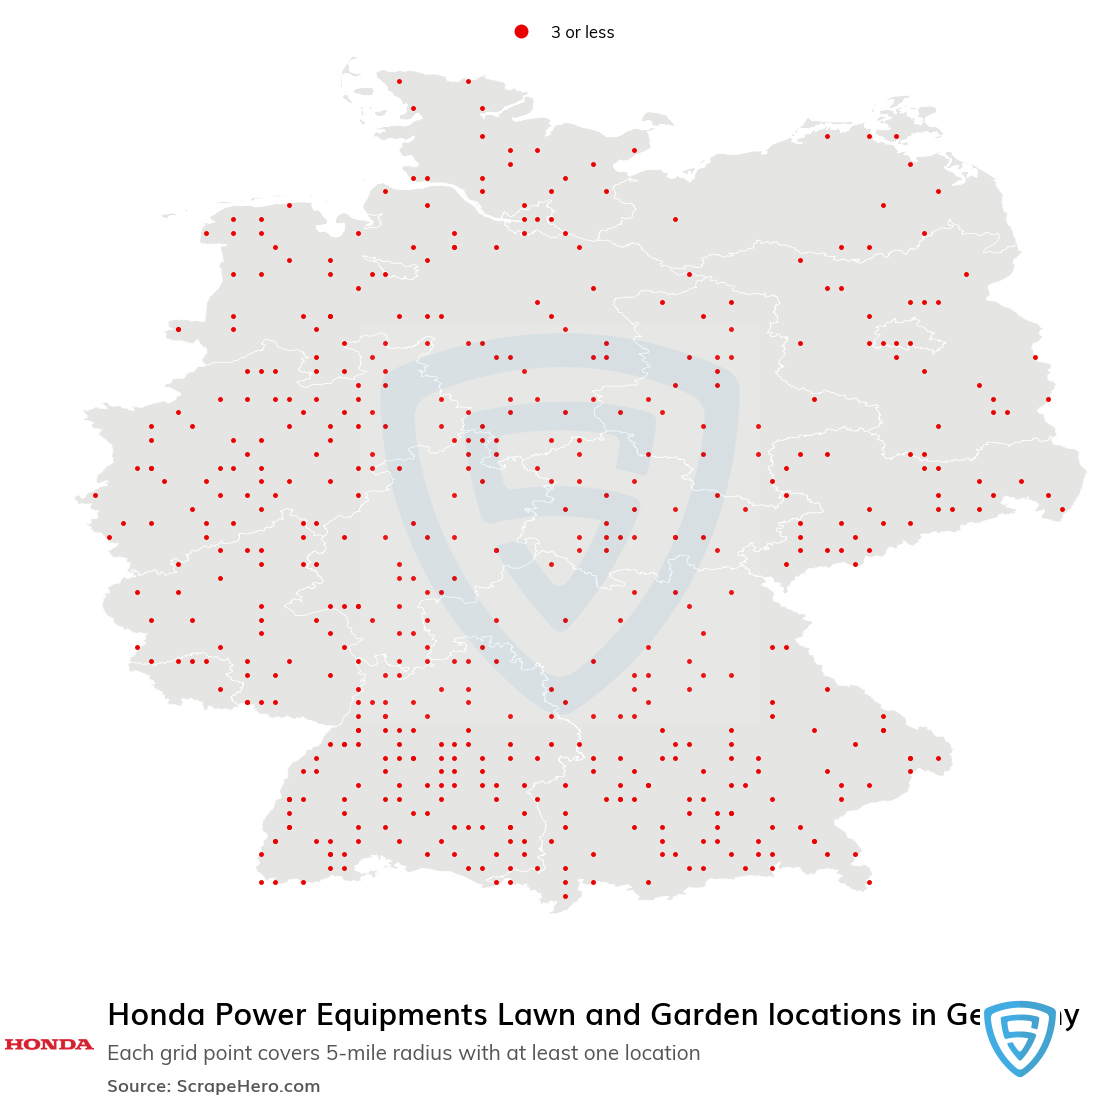 Honda Power Equipments Lawn and Garden locations